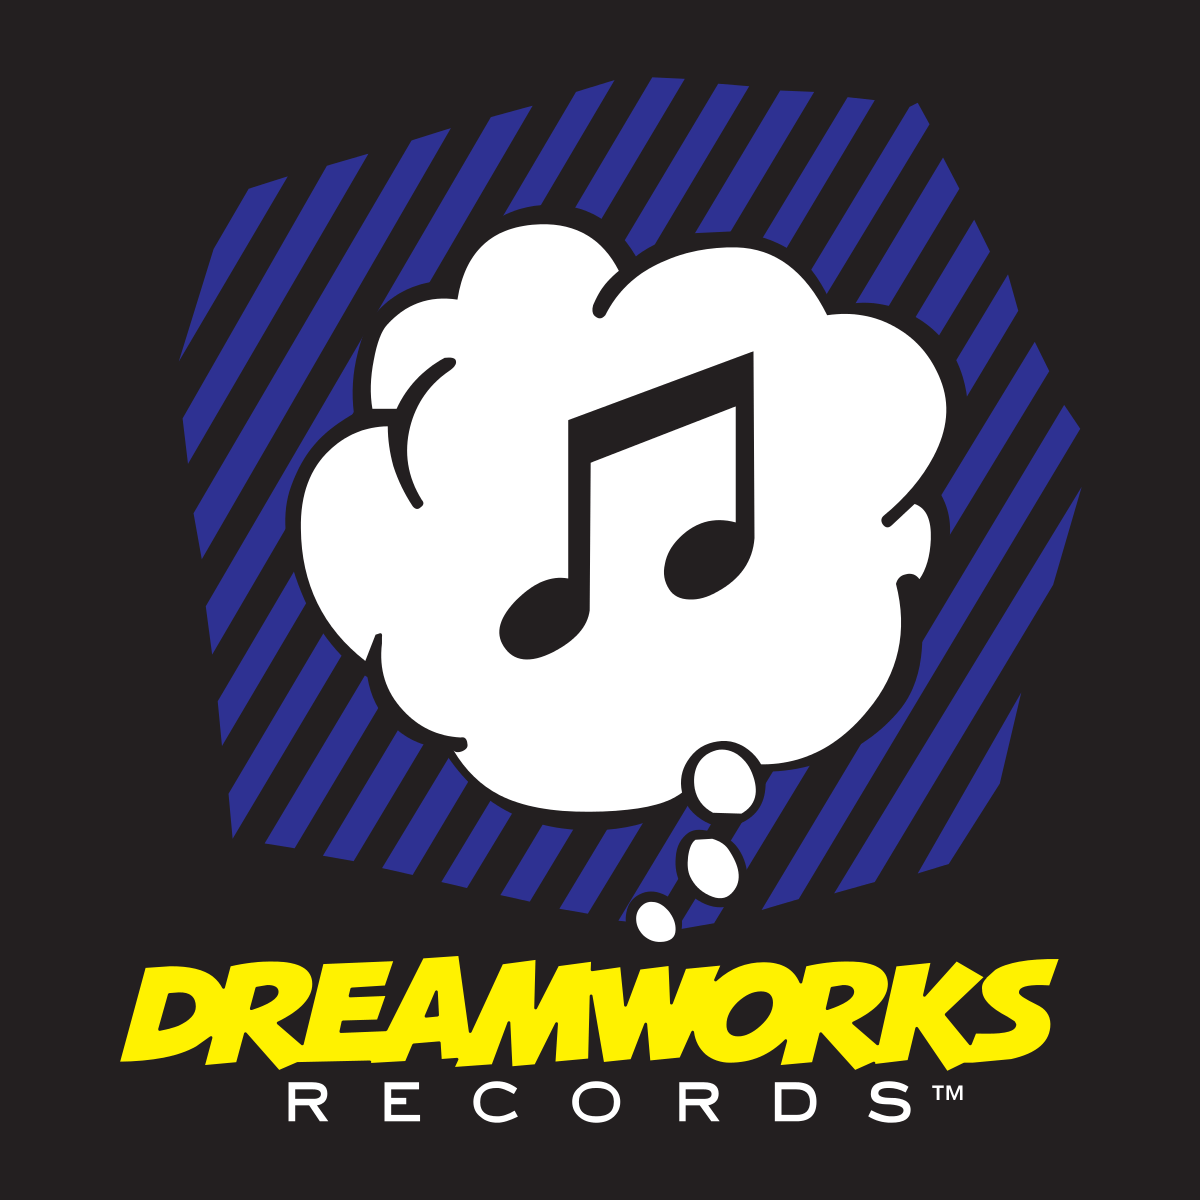 New DreamWorks Logo - DreamWorks Records